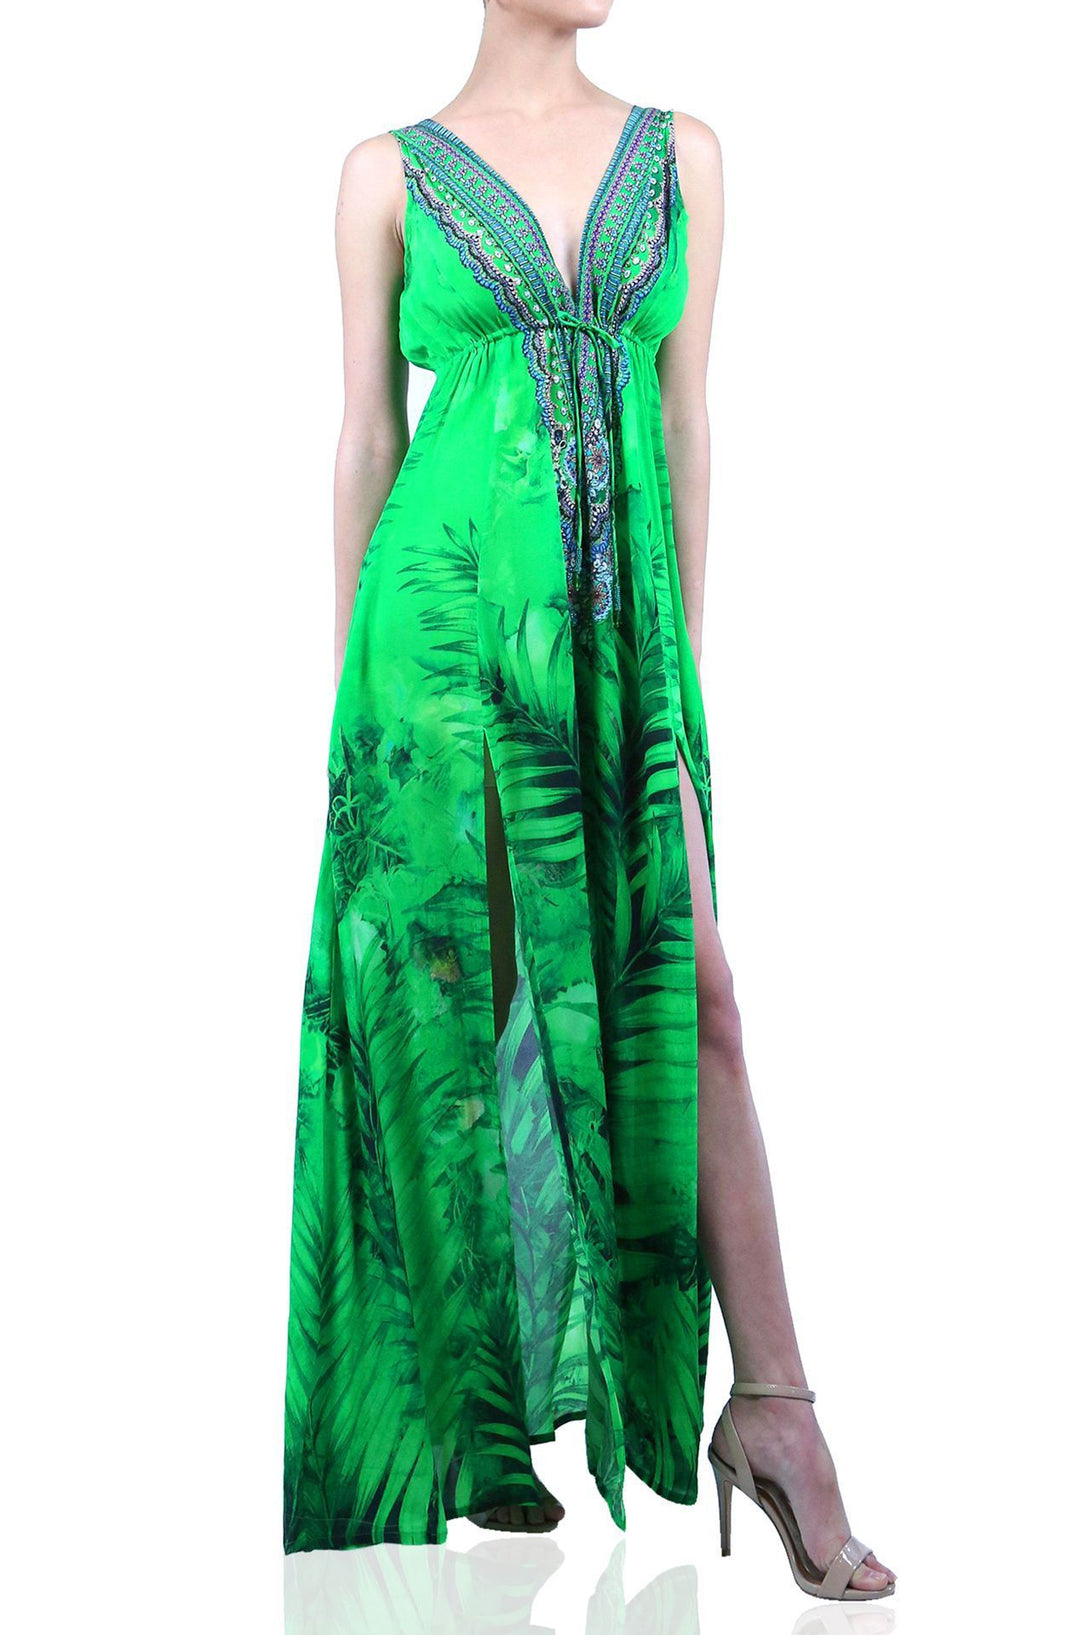  green long summer dress, summer maxi dresses for women, plunging v neck formal dress, Shahida Parides,